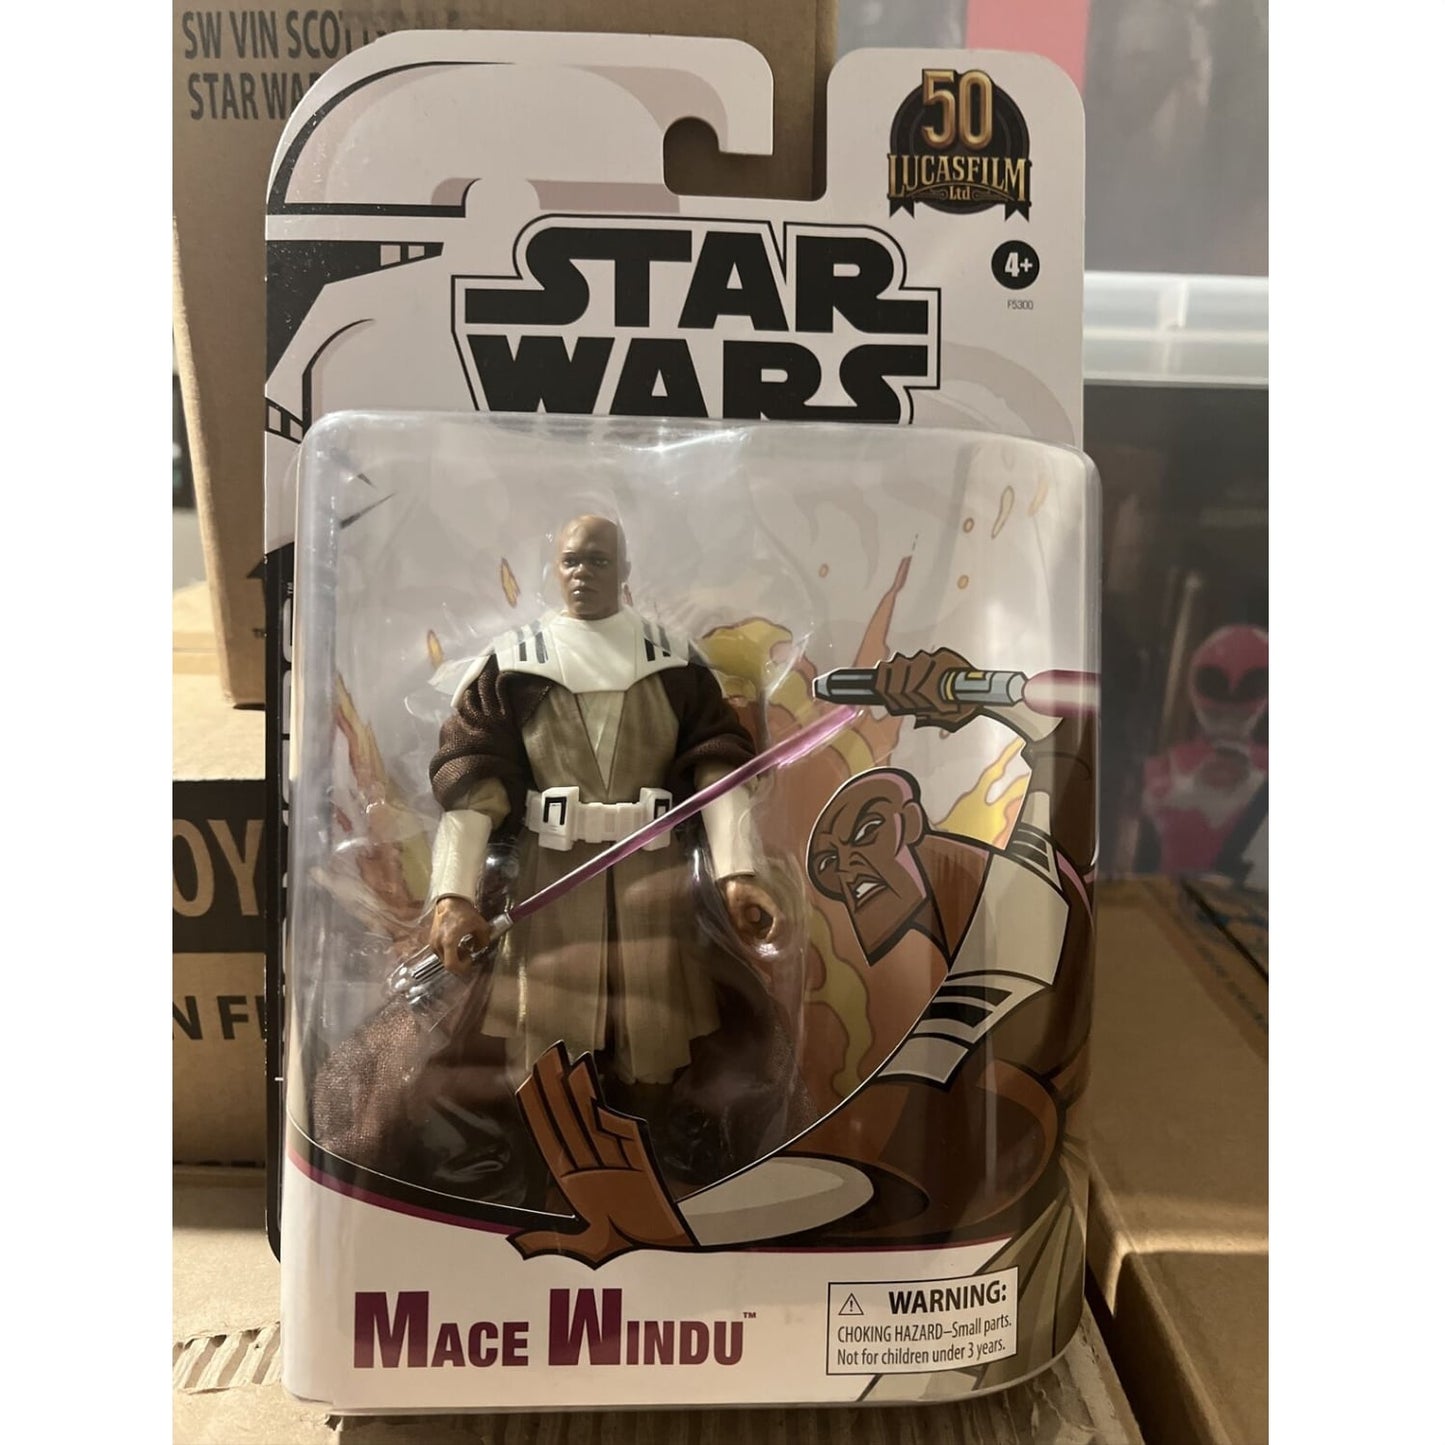 Hasbro Star Wars Clone Wars Mace Windu 6" Figure